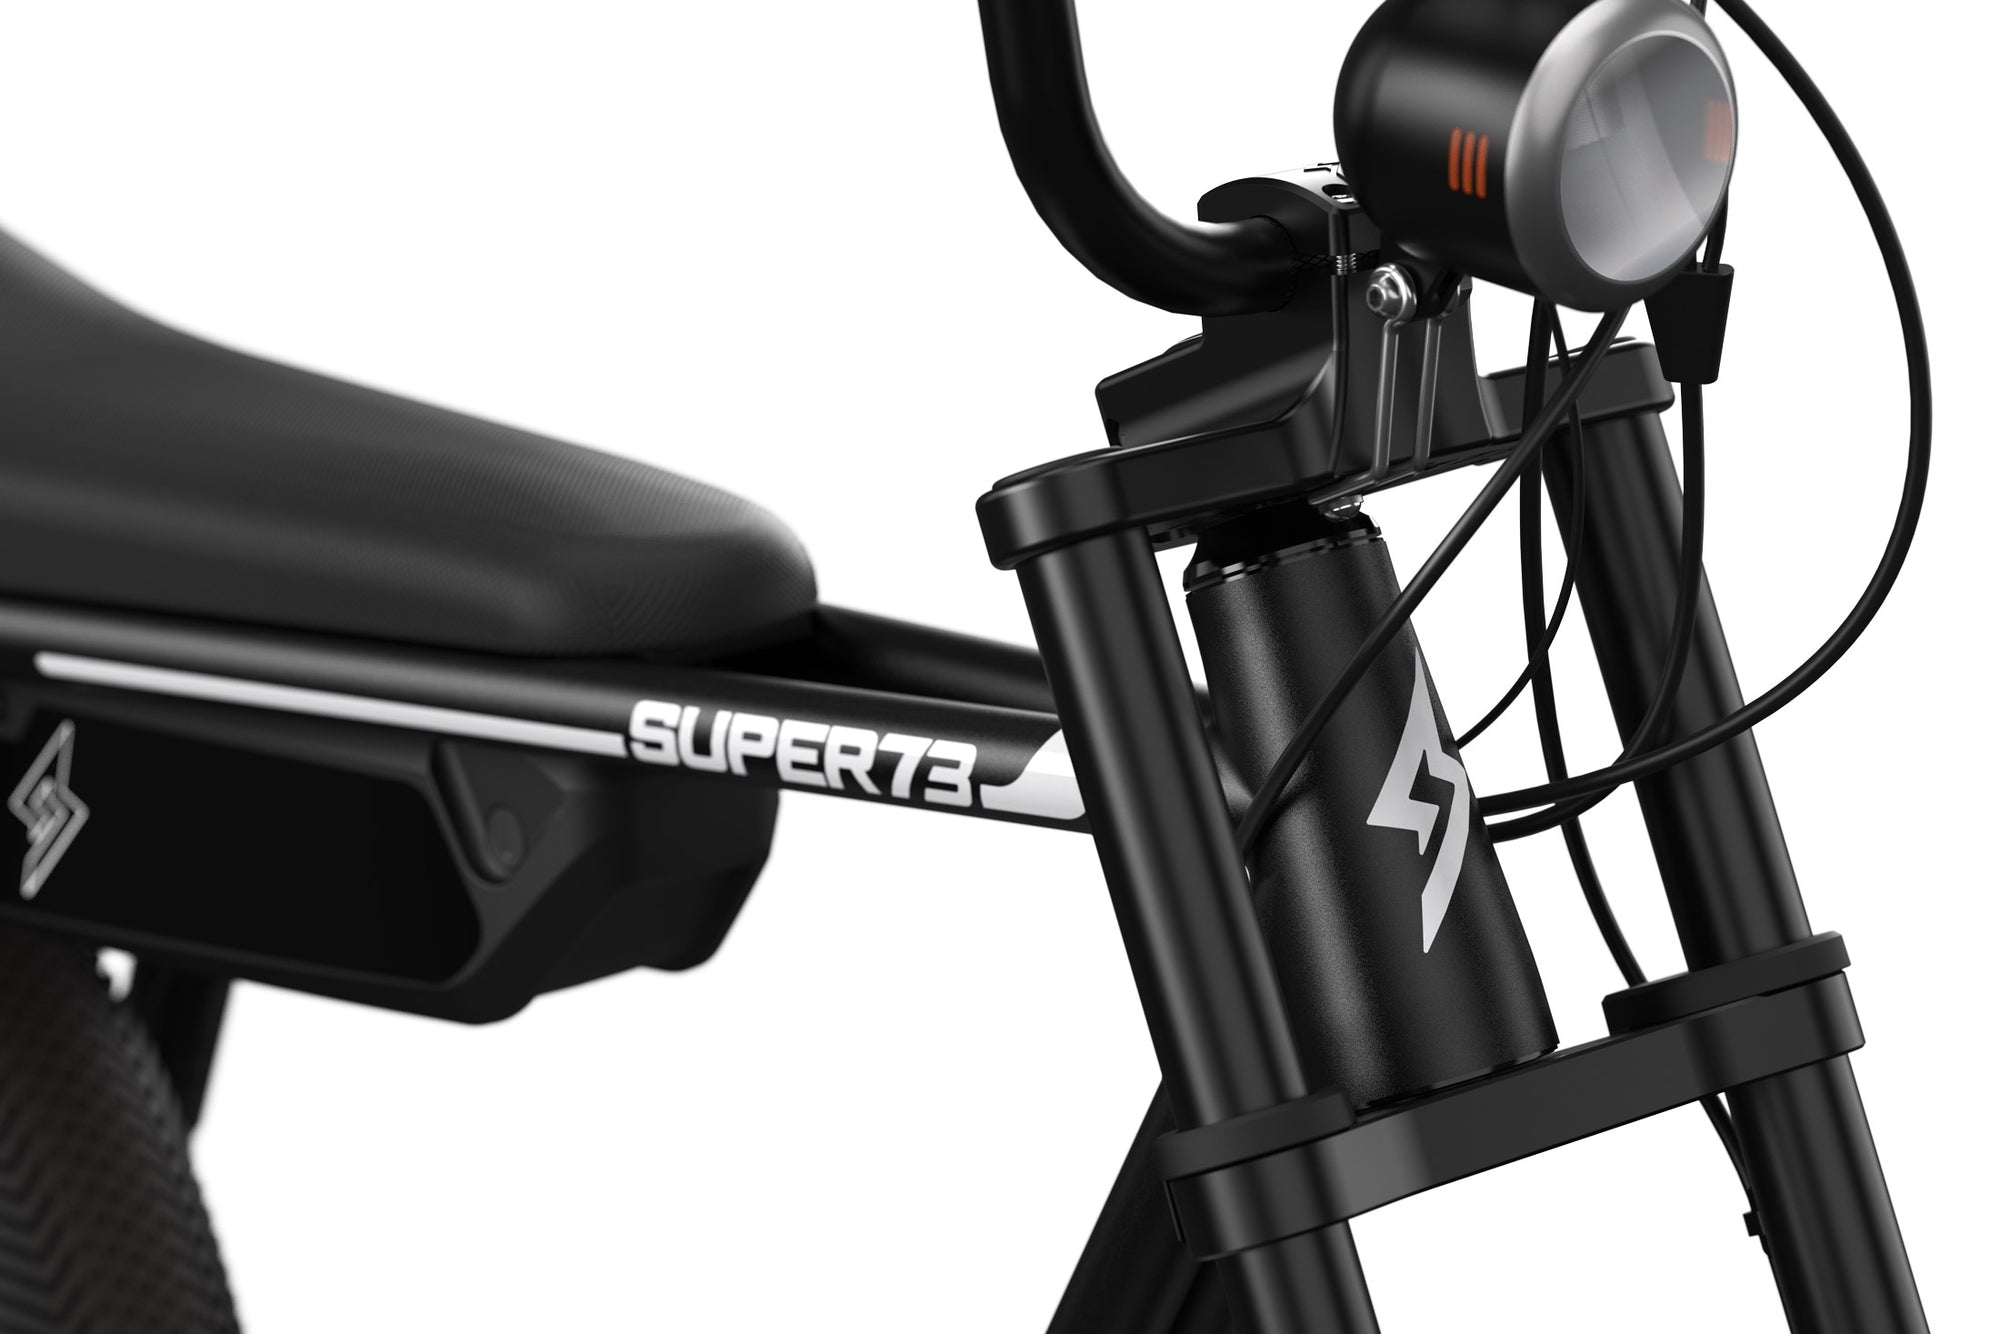 Detail shot of SUPER73-Z Miami ebike fork and headlight.